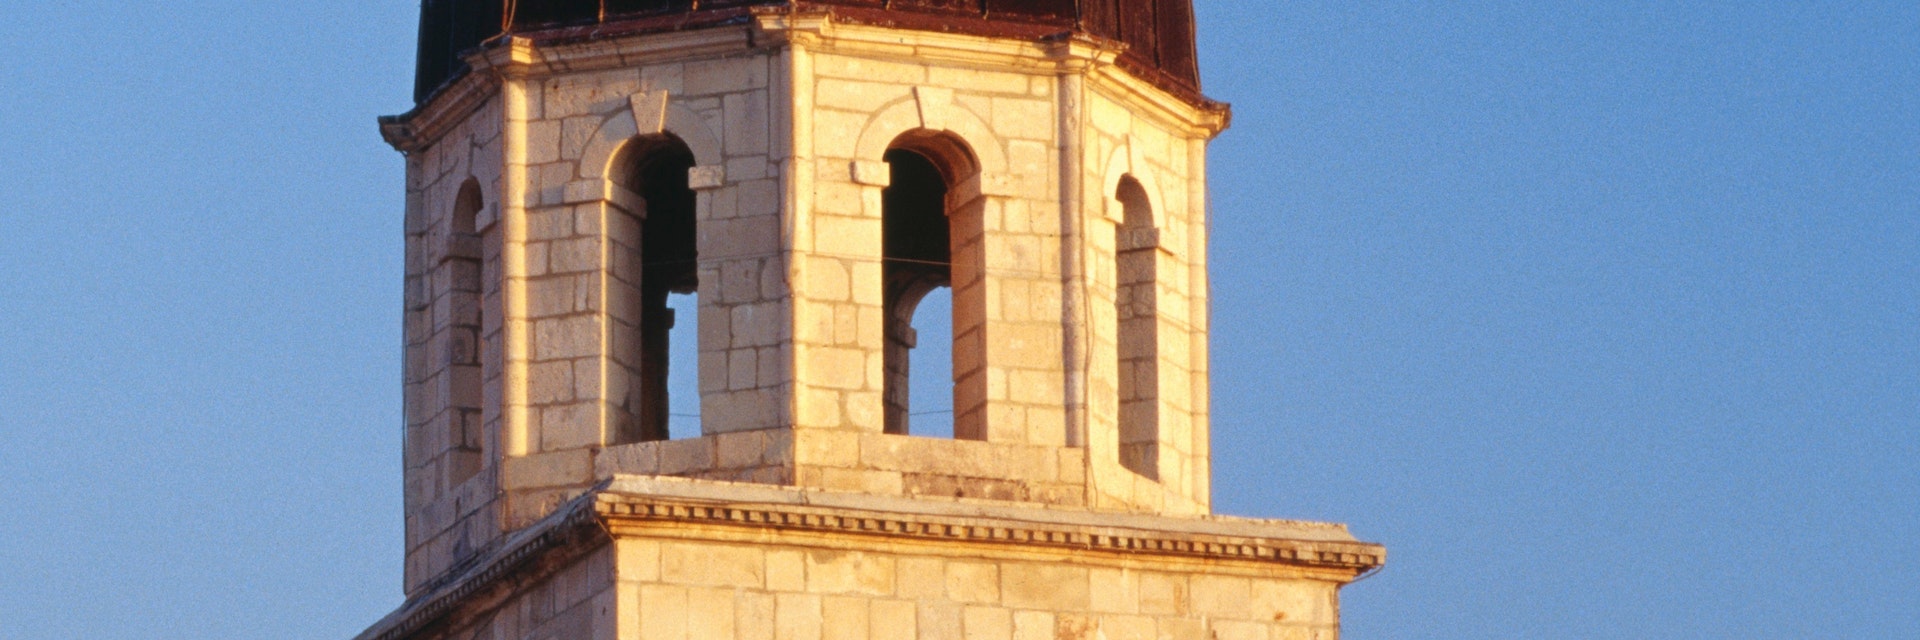 Belltower of Church of Franciscan Monastery.